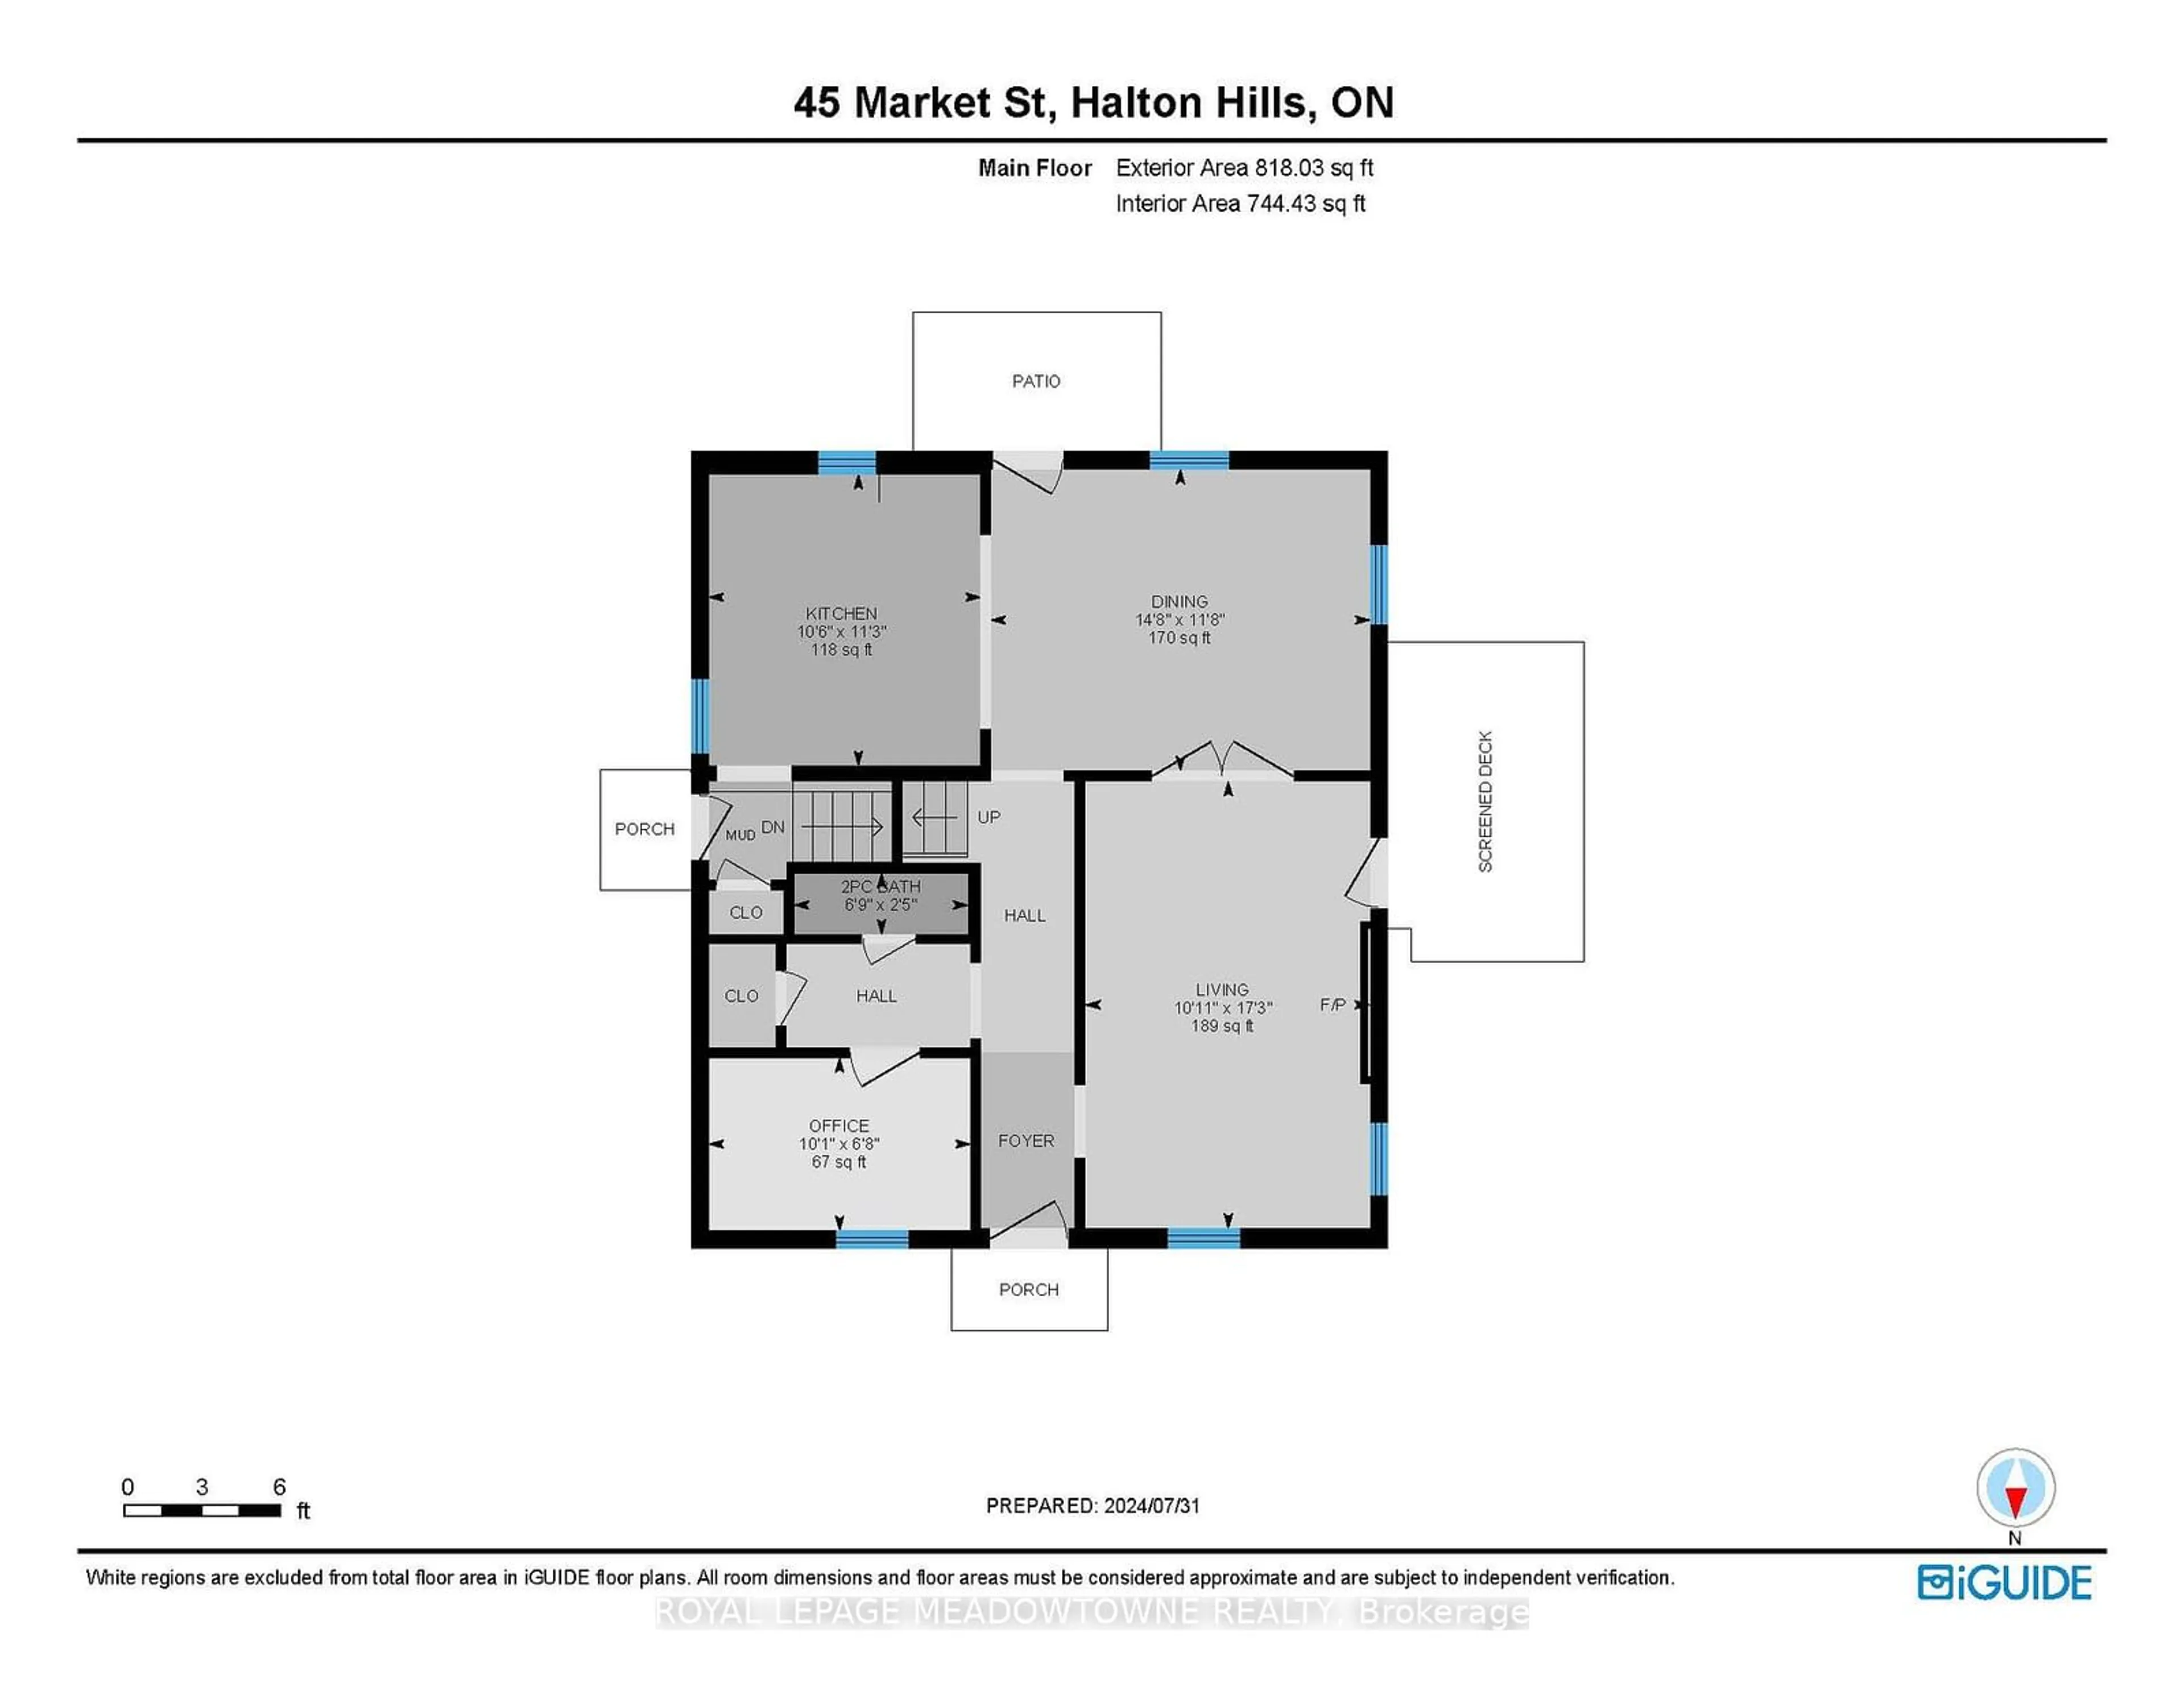 Floor plan for 45 Market St, Halton Hills Ontario L7G 3C2